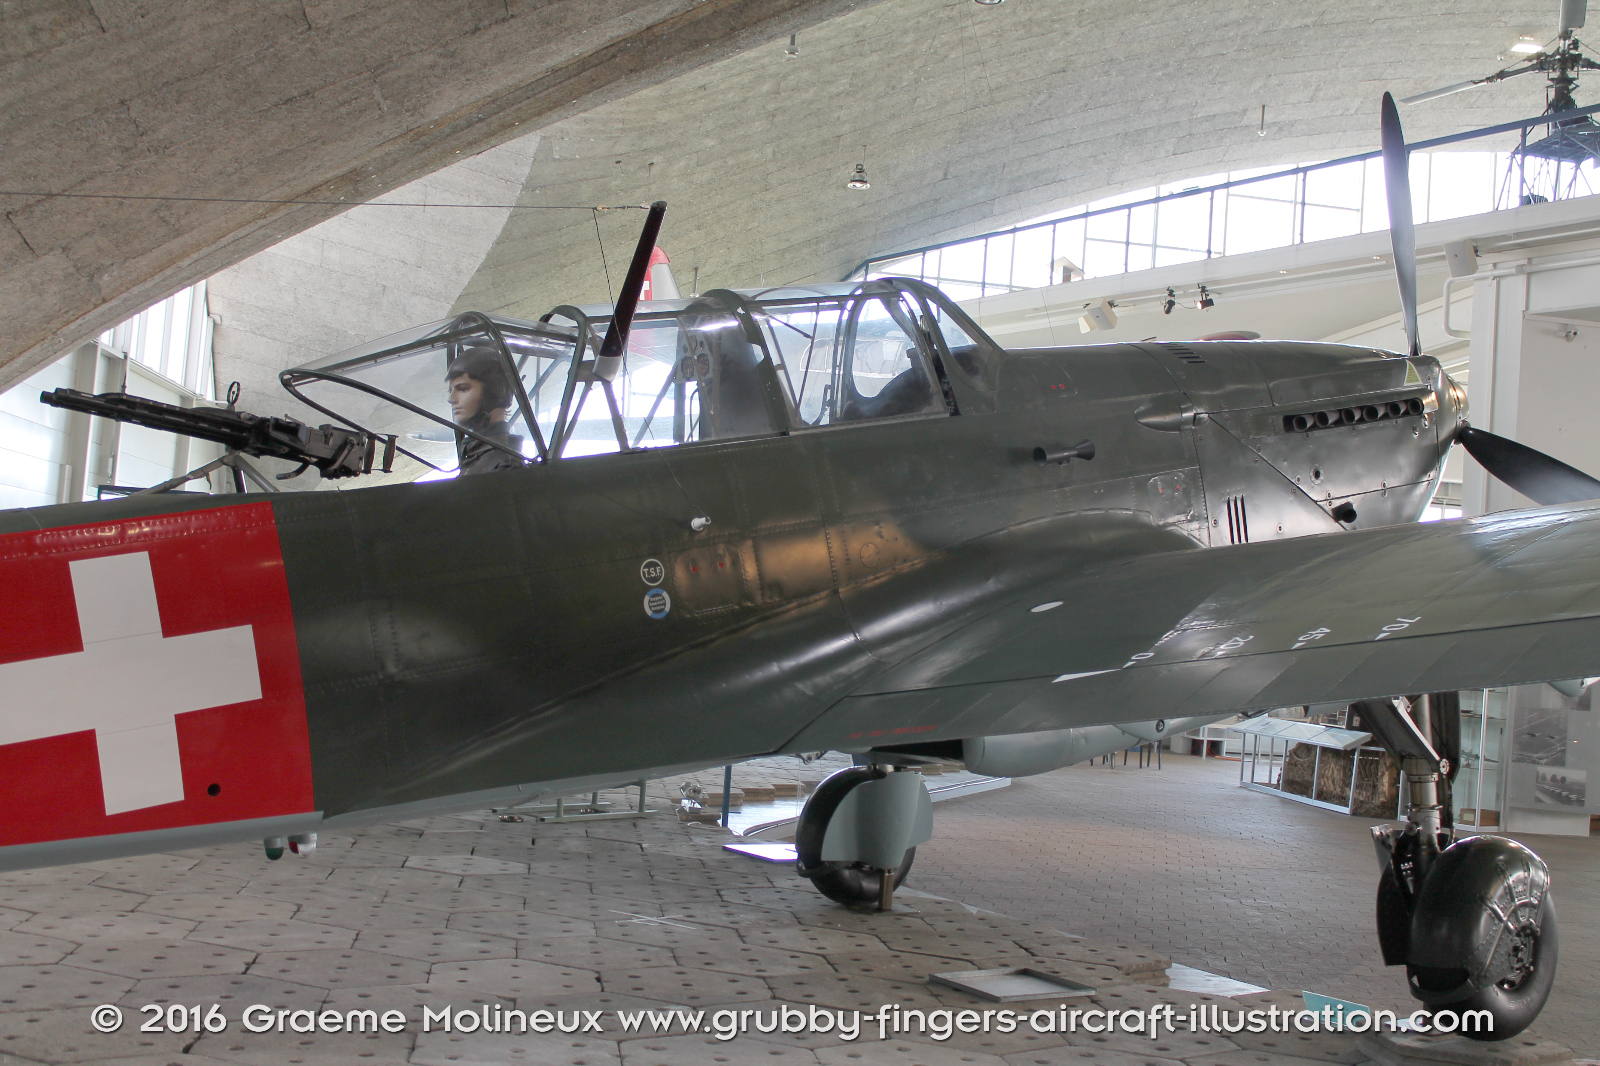 K+W_C-36_C-534_Swiss_Air_Force_Museum_2015_08_GrubbyFingers